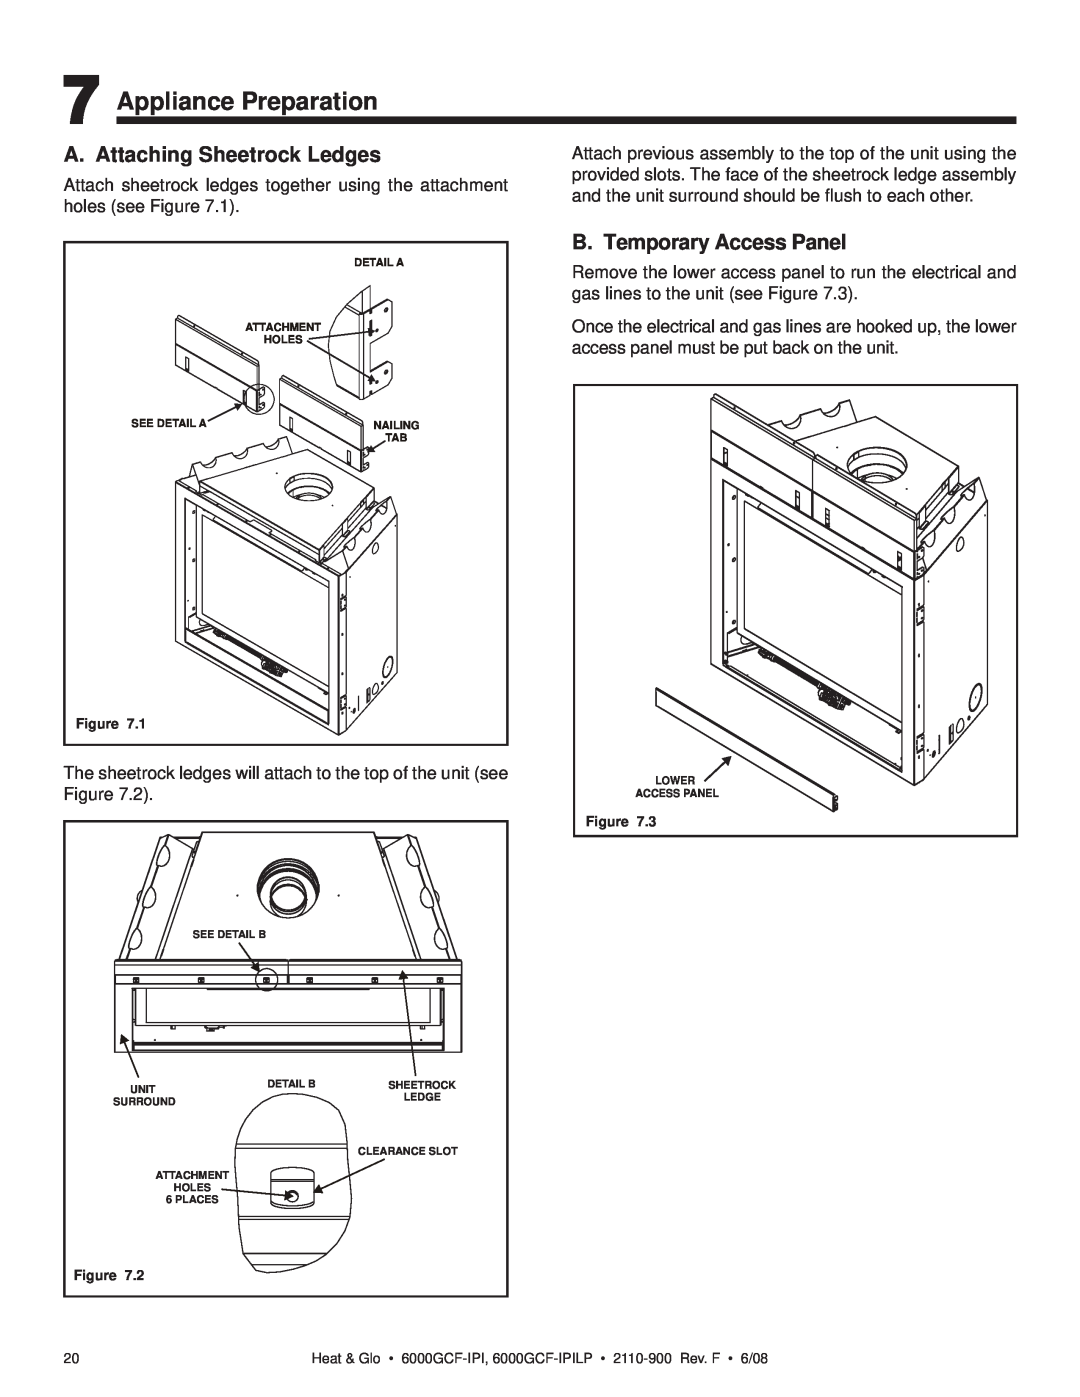 Heat & Glo LifeStyle 6000GCF-IPILP Appliance Preparation, A. Attaching Sheetrock Ledges, B. Temporary Access Panel 